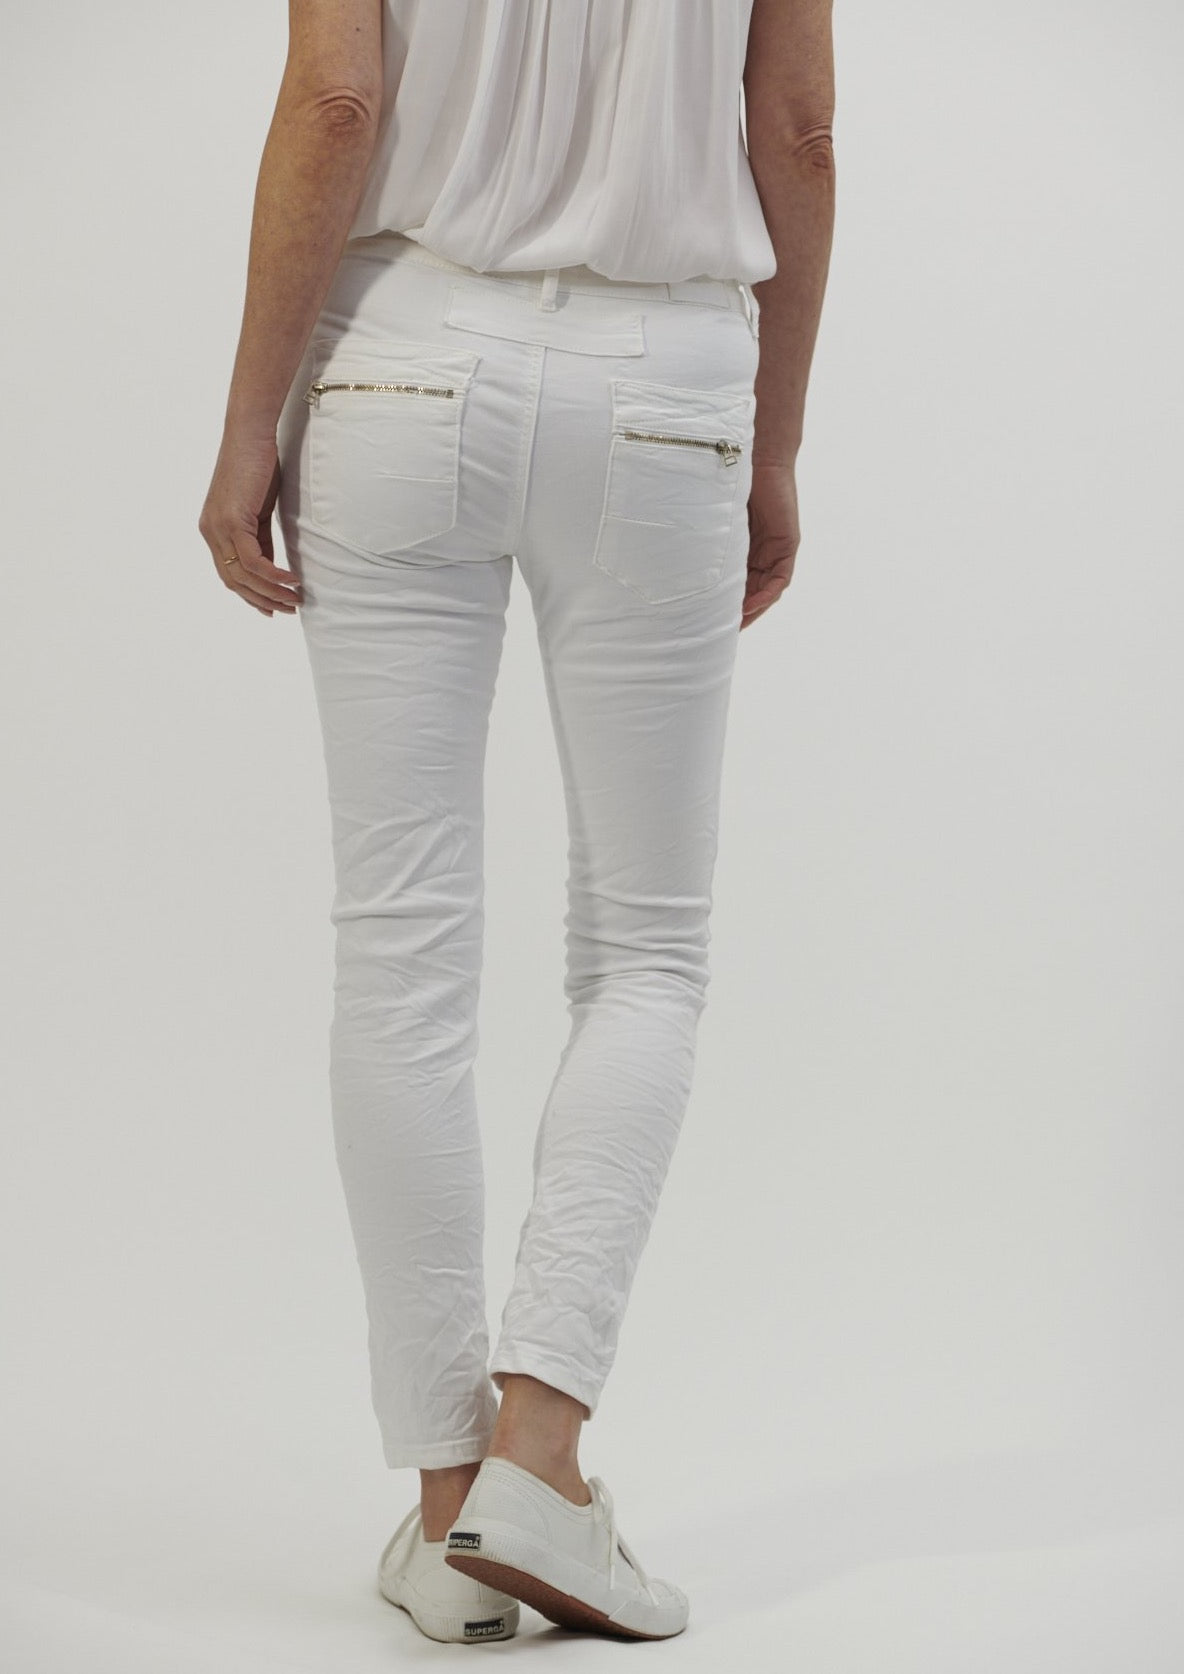 Italian Star Button Jeans - White